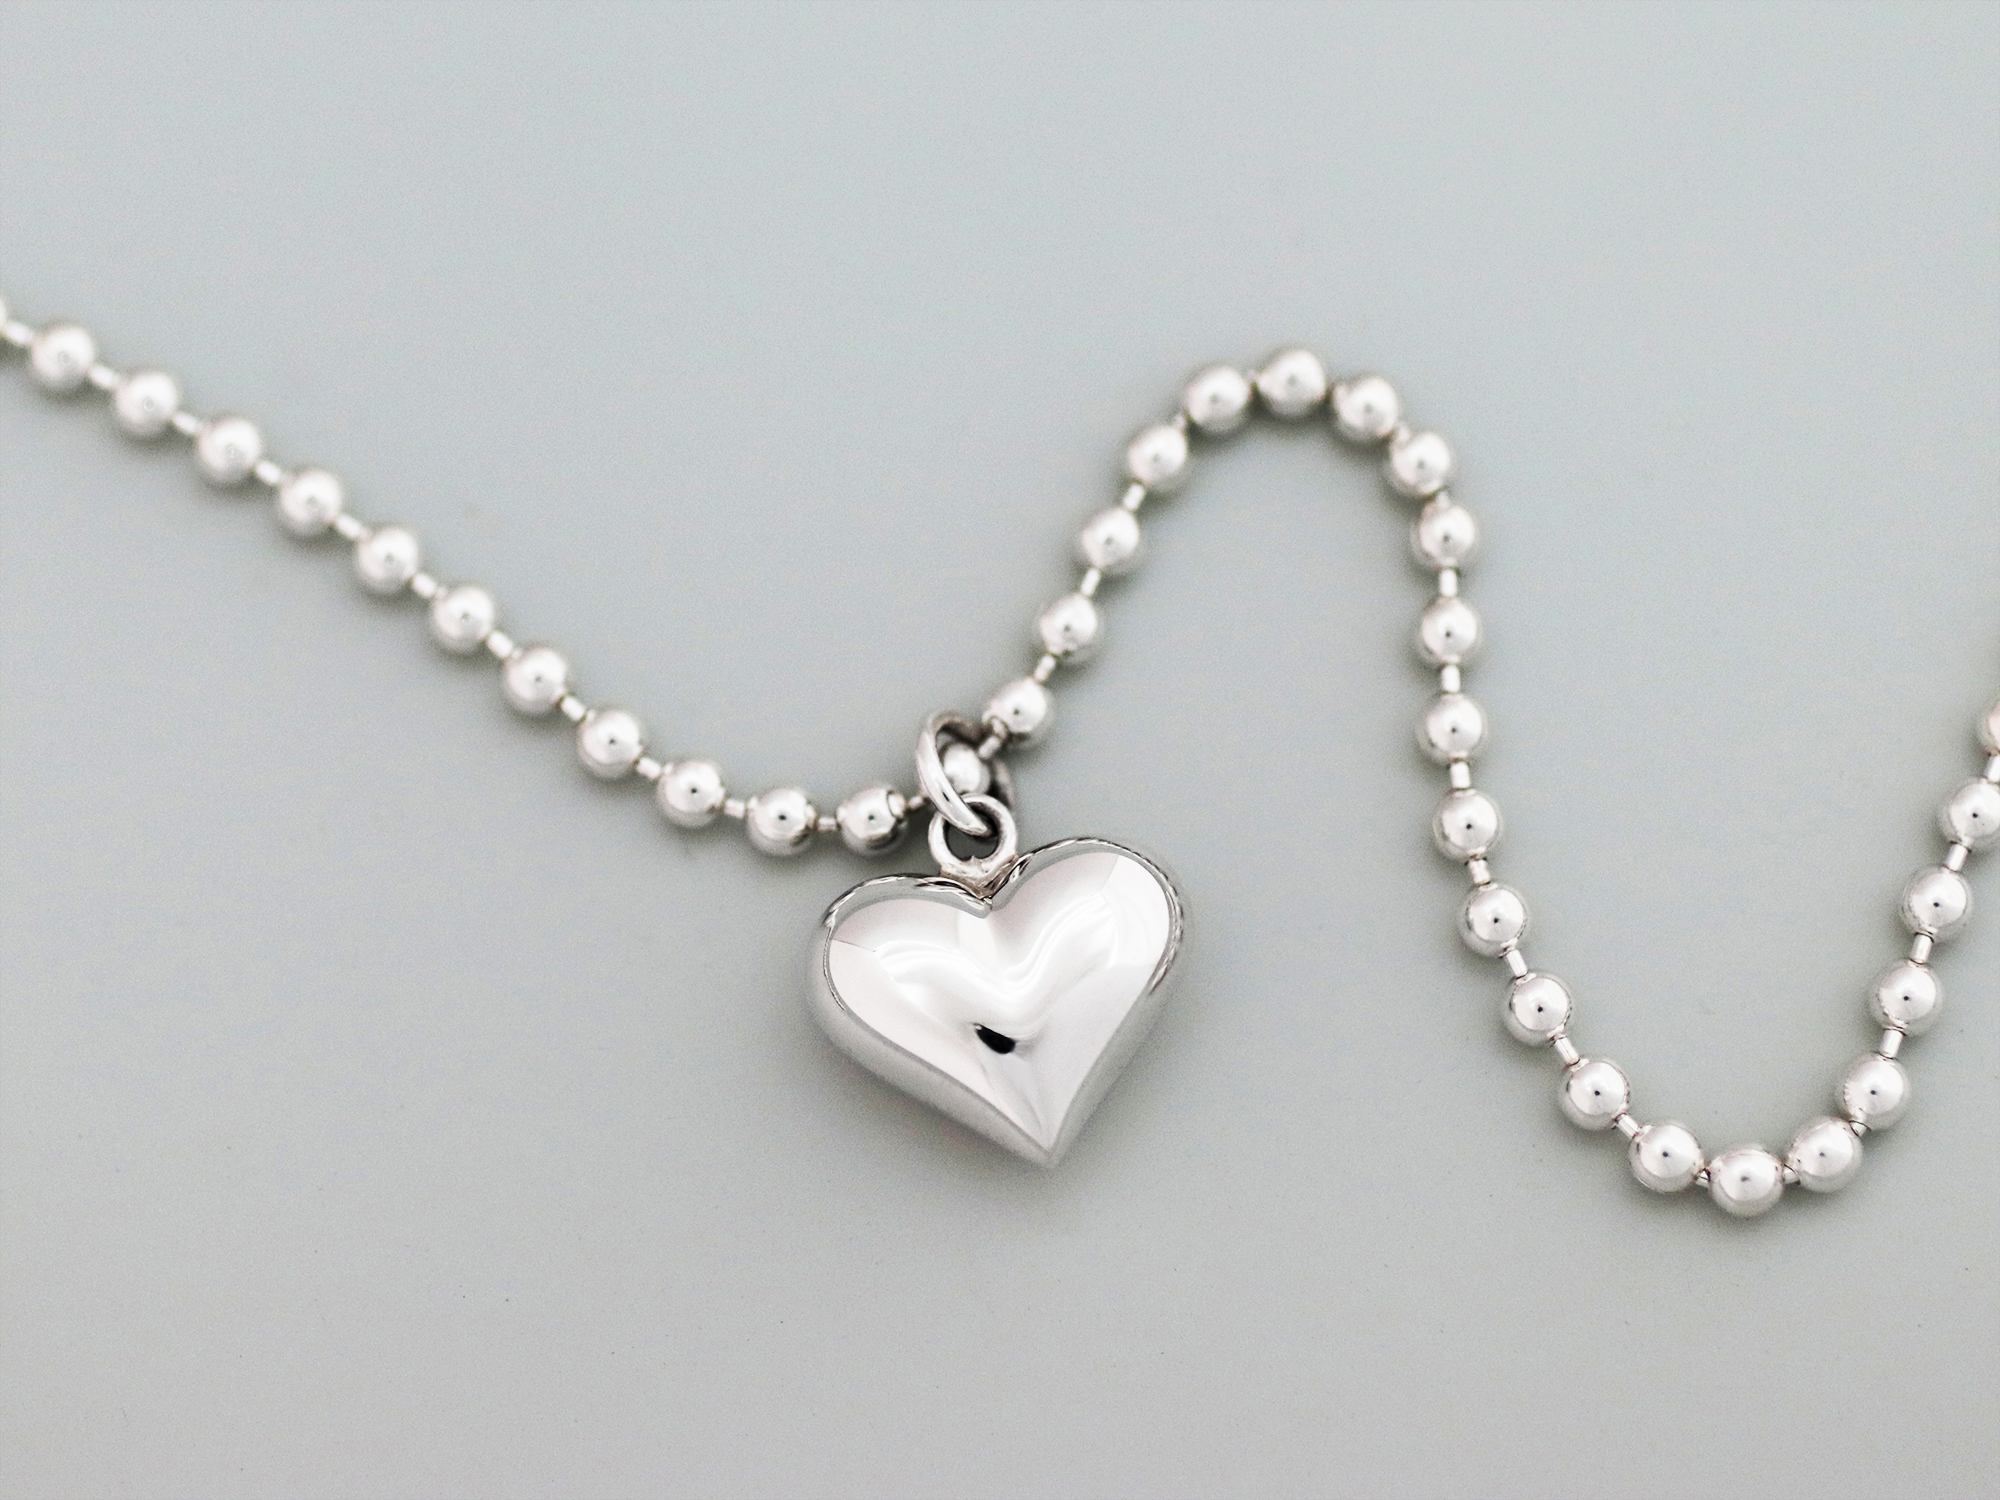 Silver Heart Pendant Bead Chain Necklace / Bracelet - 925 sterling